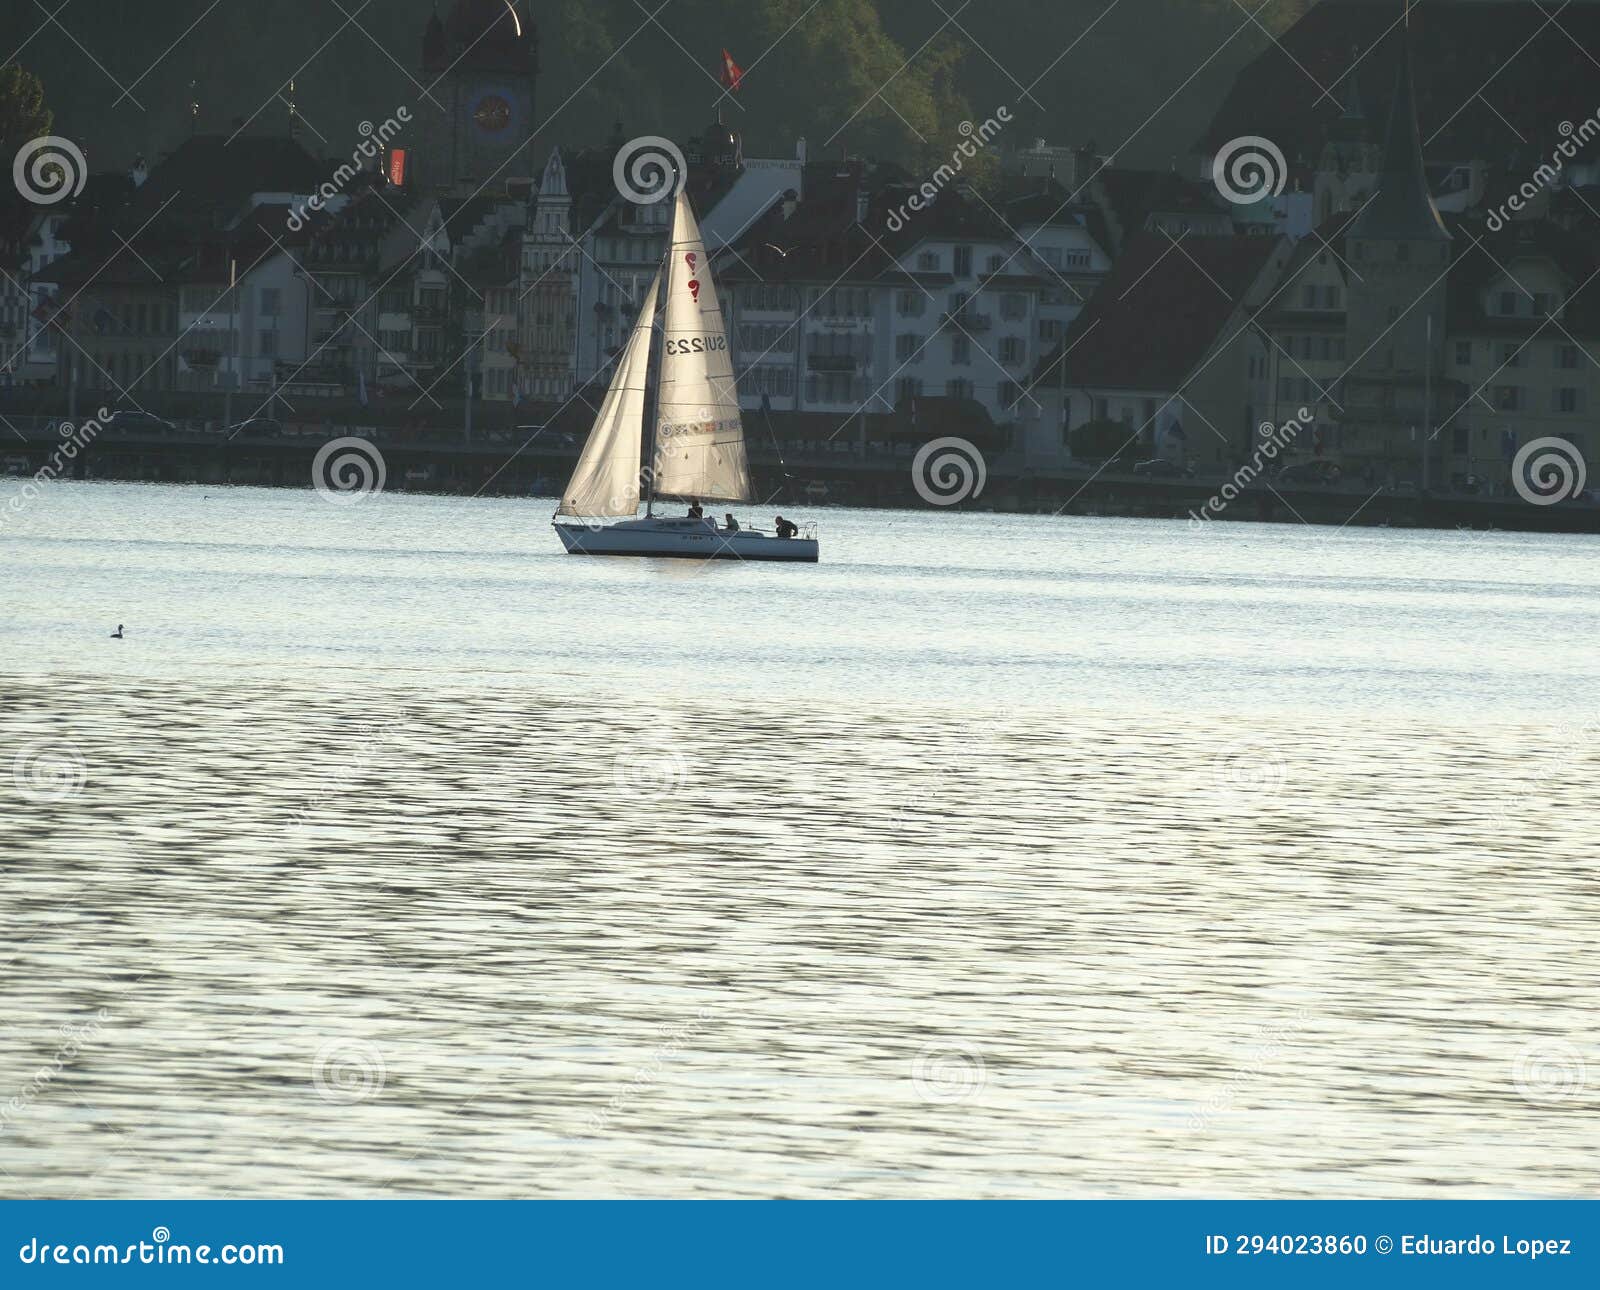 sailing in the lake of luzerna